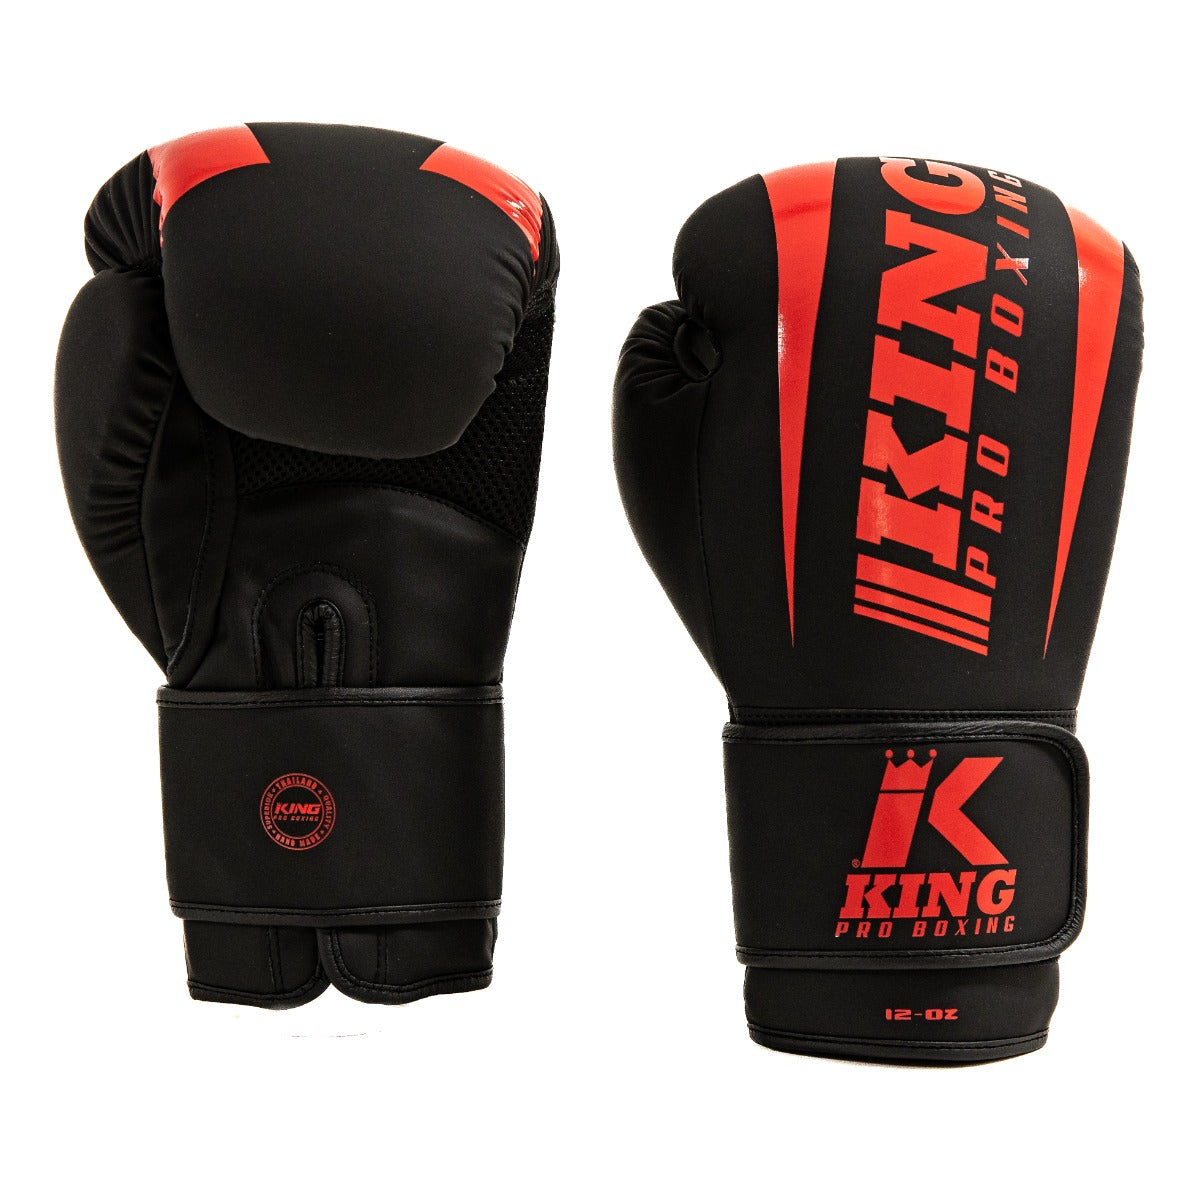 King PRO boxing boxing gloves - REVO 8